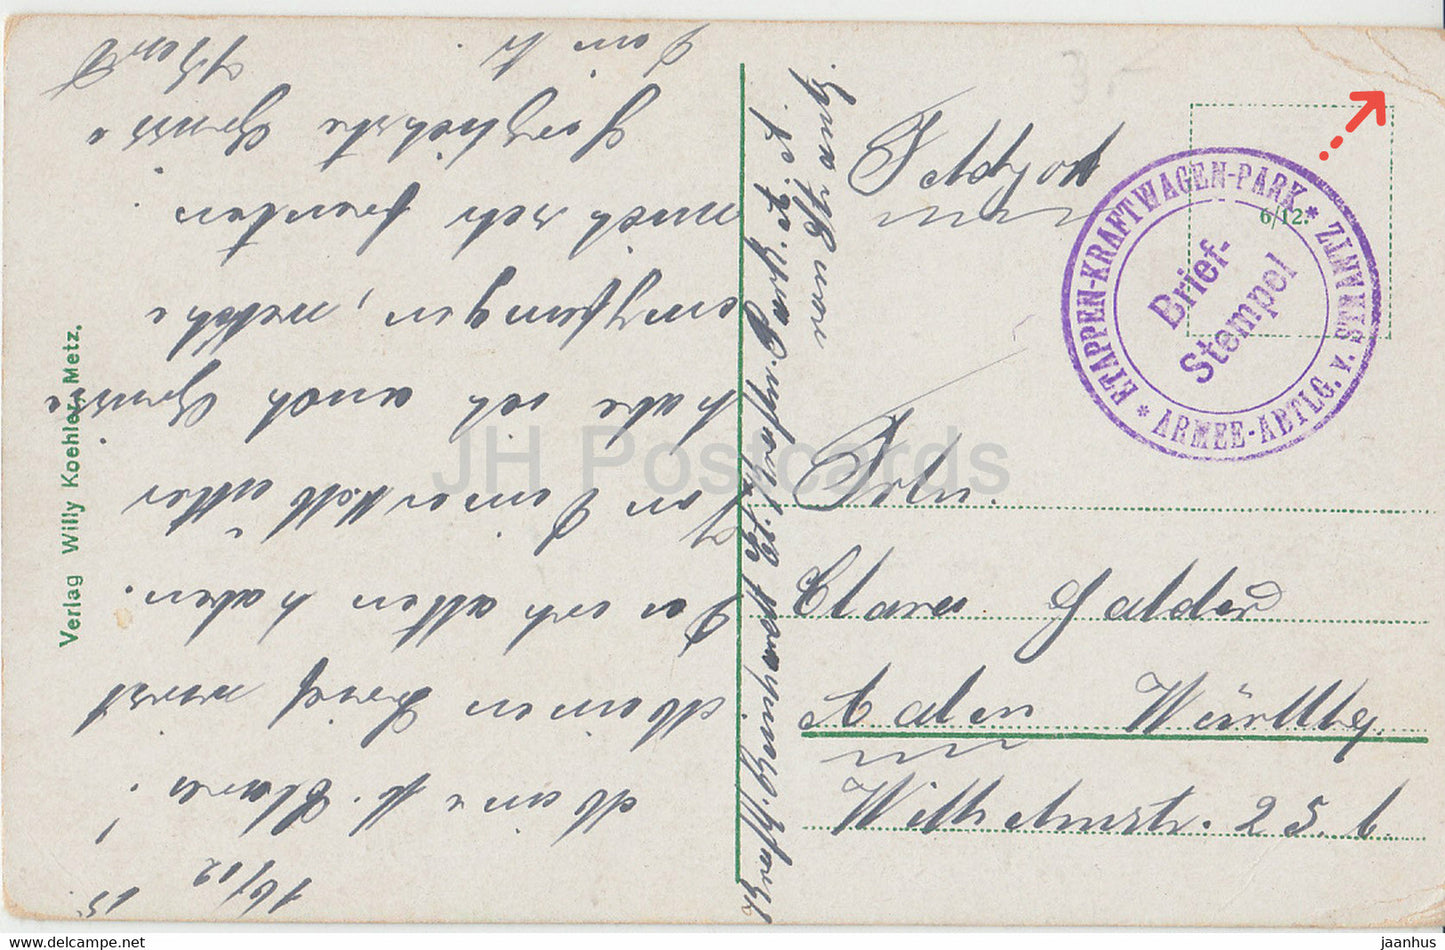 Metz - Generalkommando - Etappen Kraftwagen Park - Feldpost - old postcard - 1915 - France - used